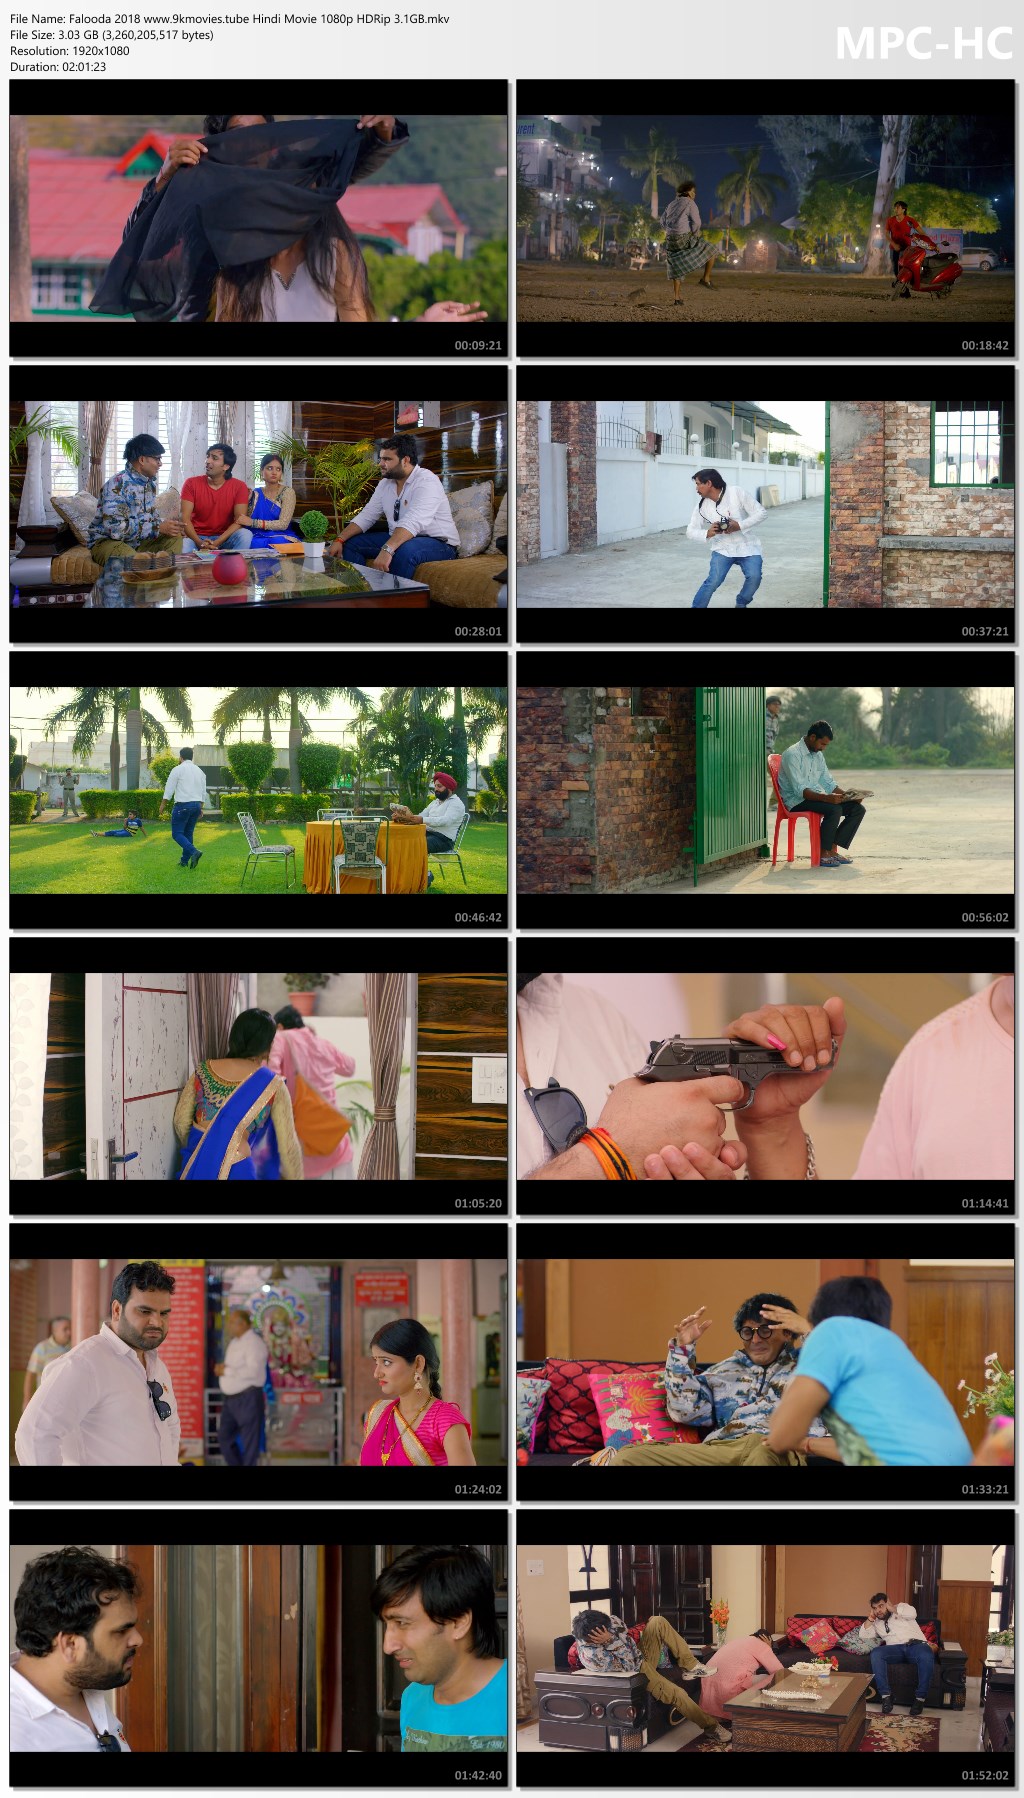 Falooda 2018 www.9kmovies.tube Hindi Movie 1080p HDRip 3.1GB.mkv thumbs